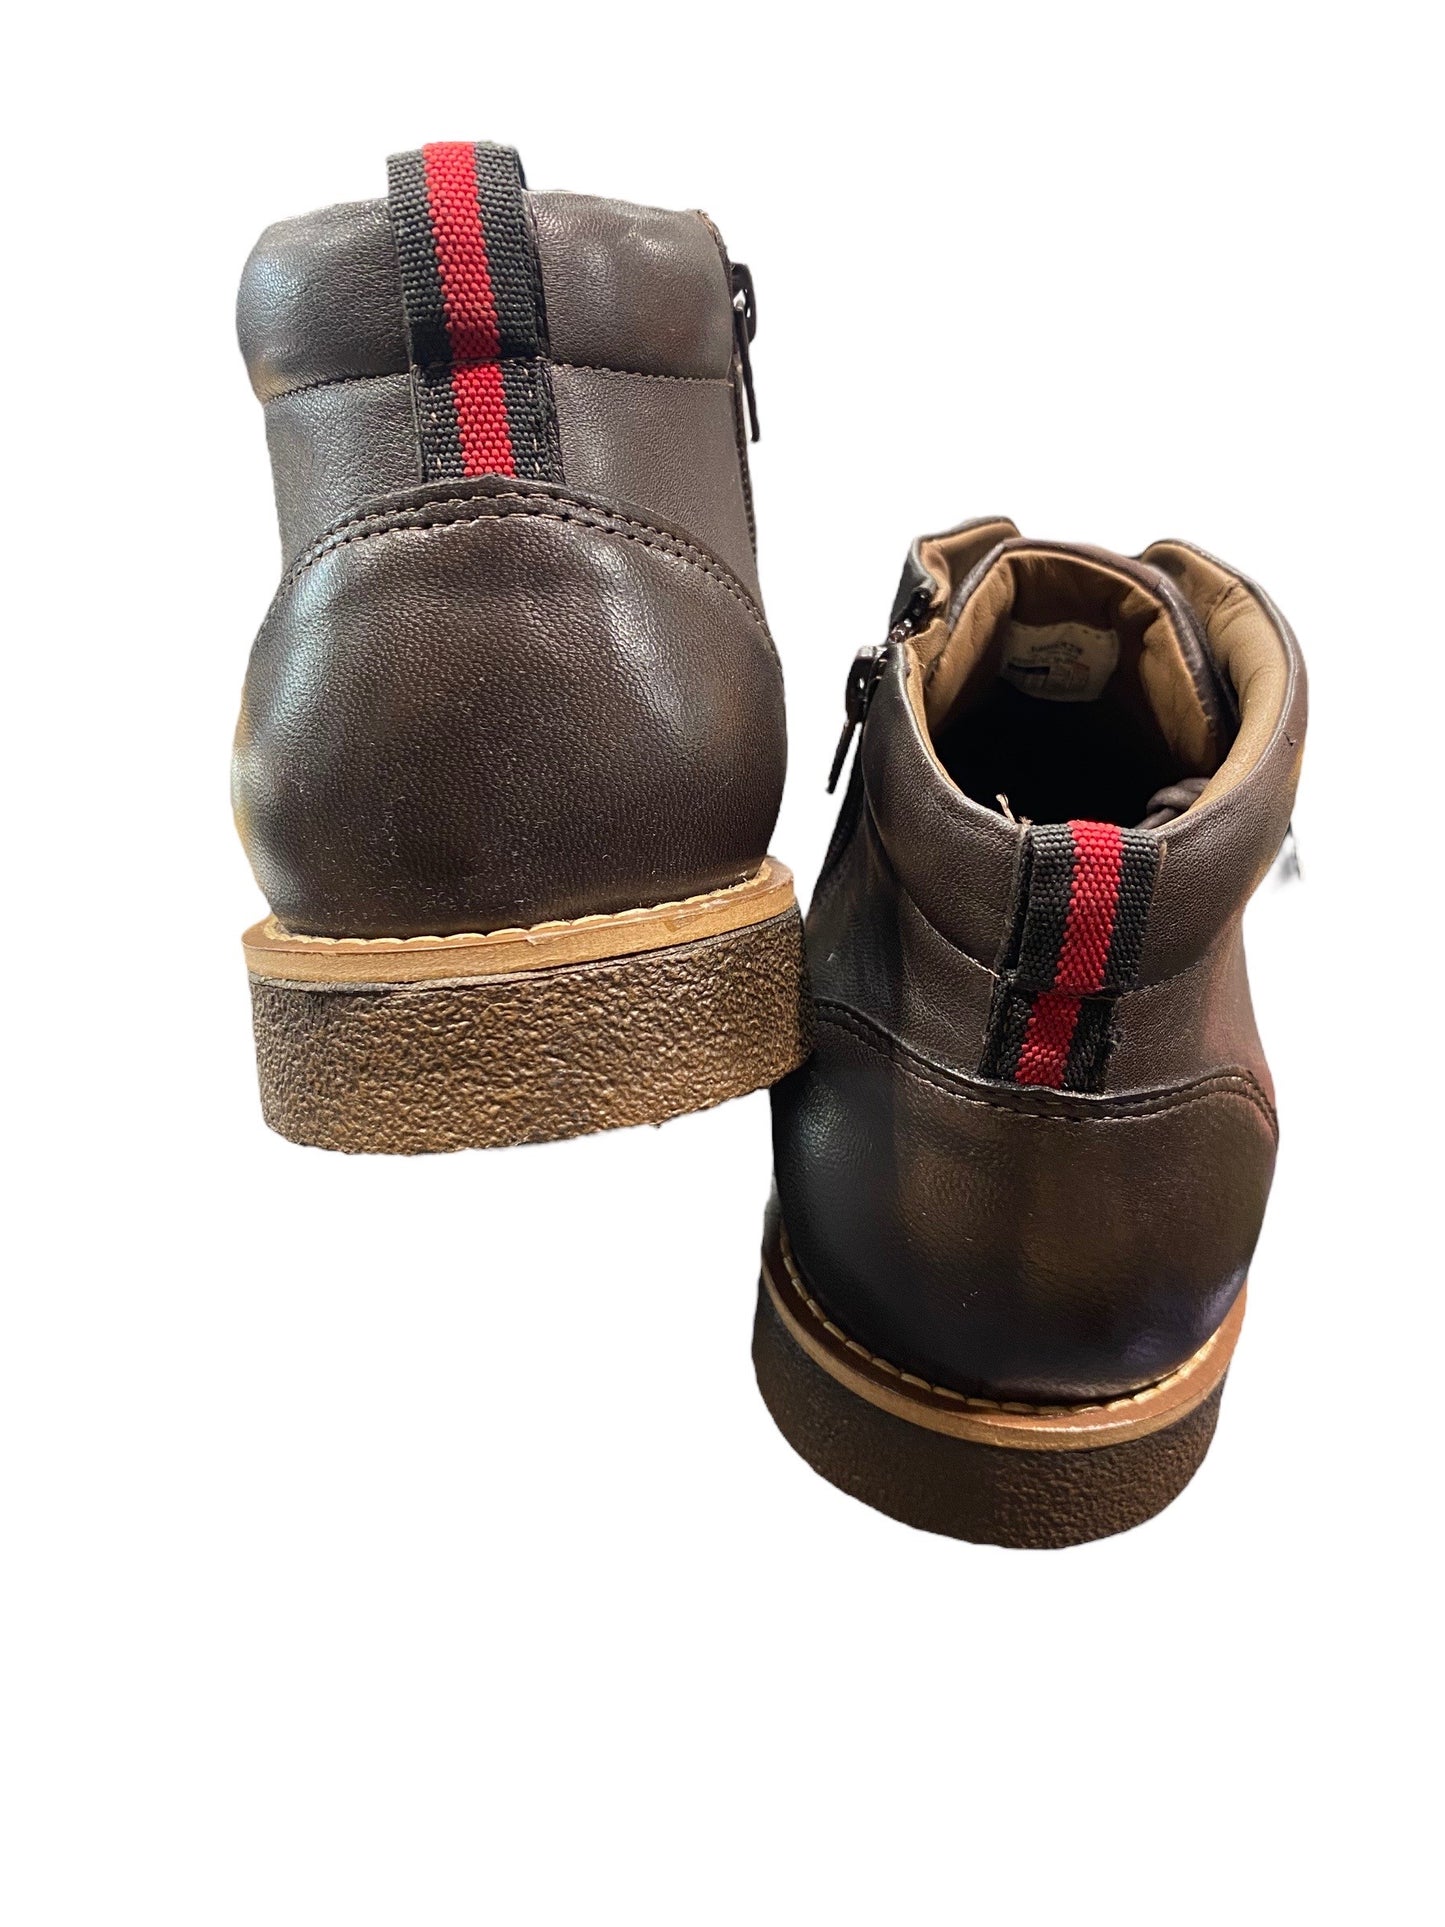 Ferracini - Princes Boots - Brown